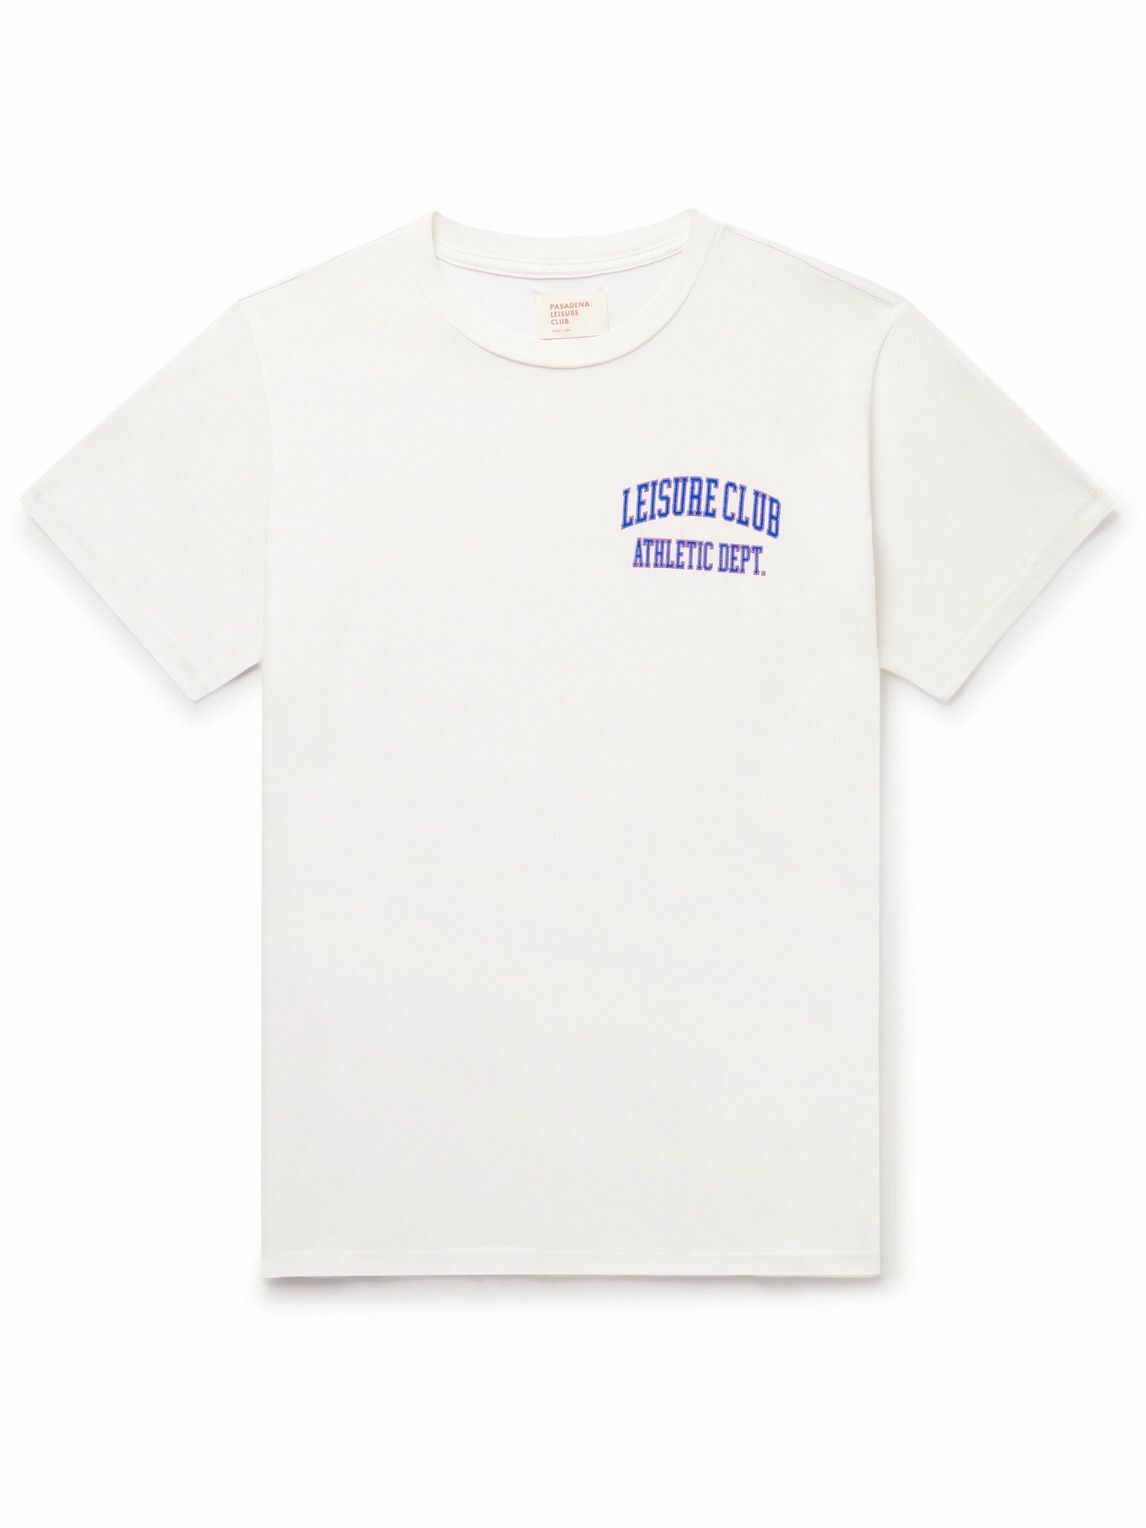 Photo: Pasadena Leisure Club - Athletic Dept. Logo-Print Garment-Dyed Cotton-Jersey T-Shirt - White